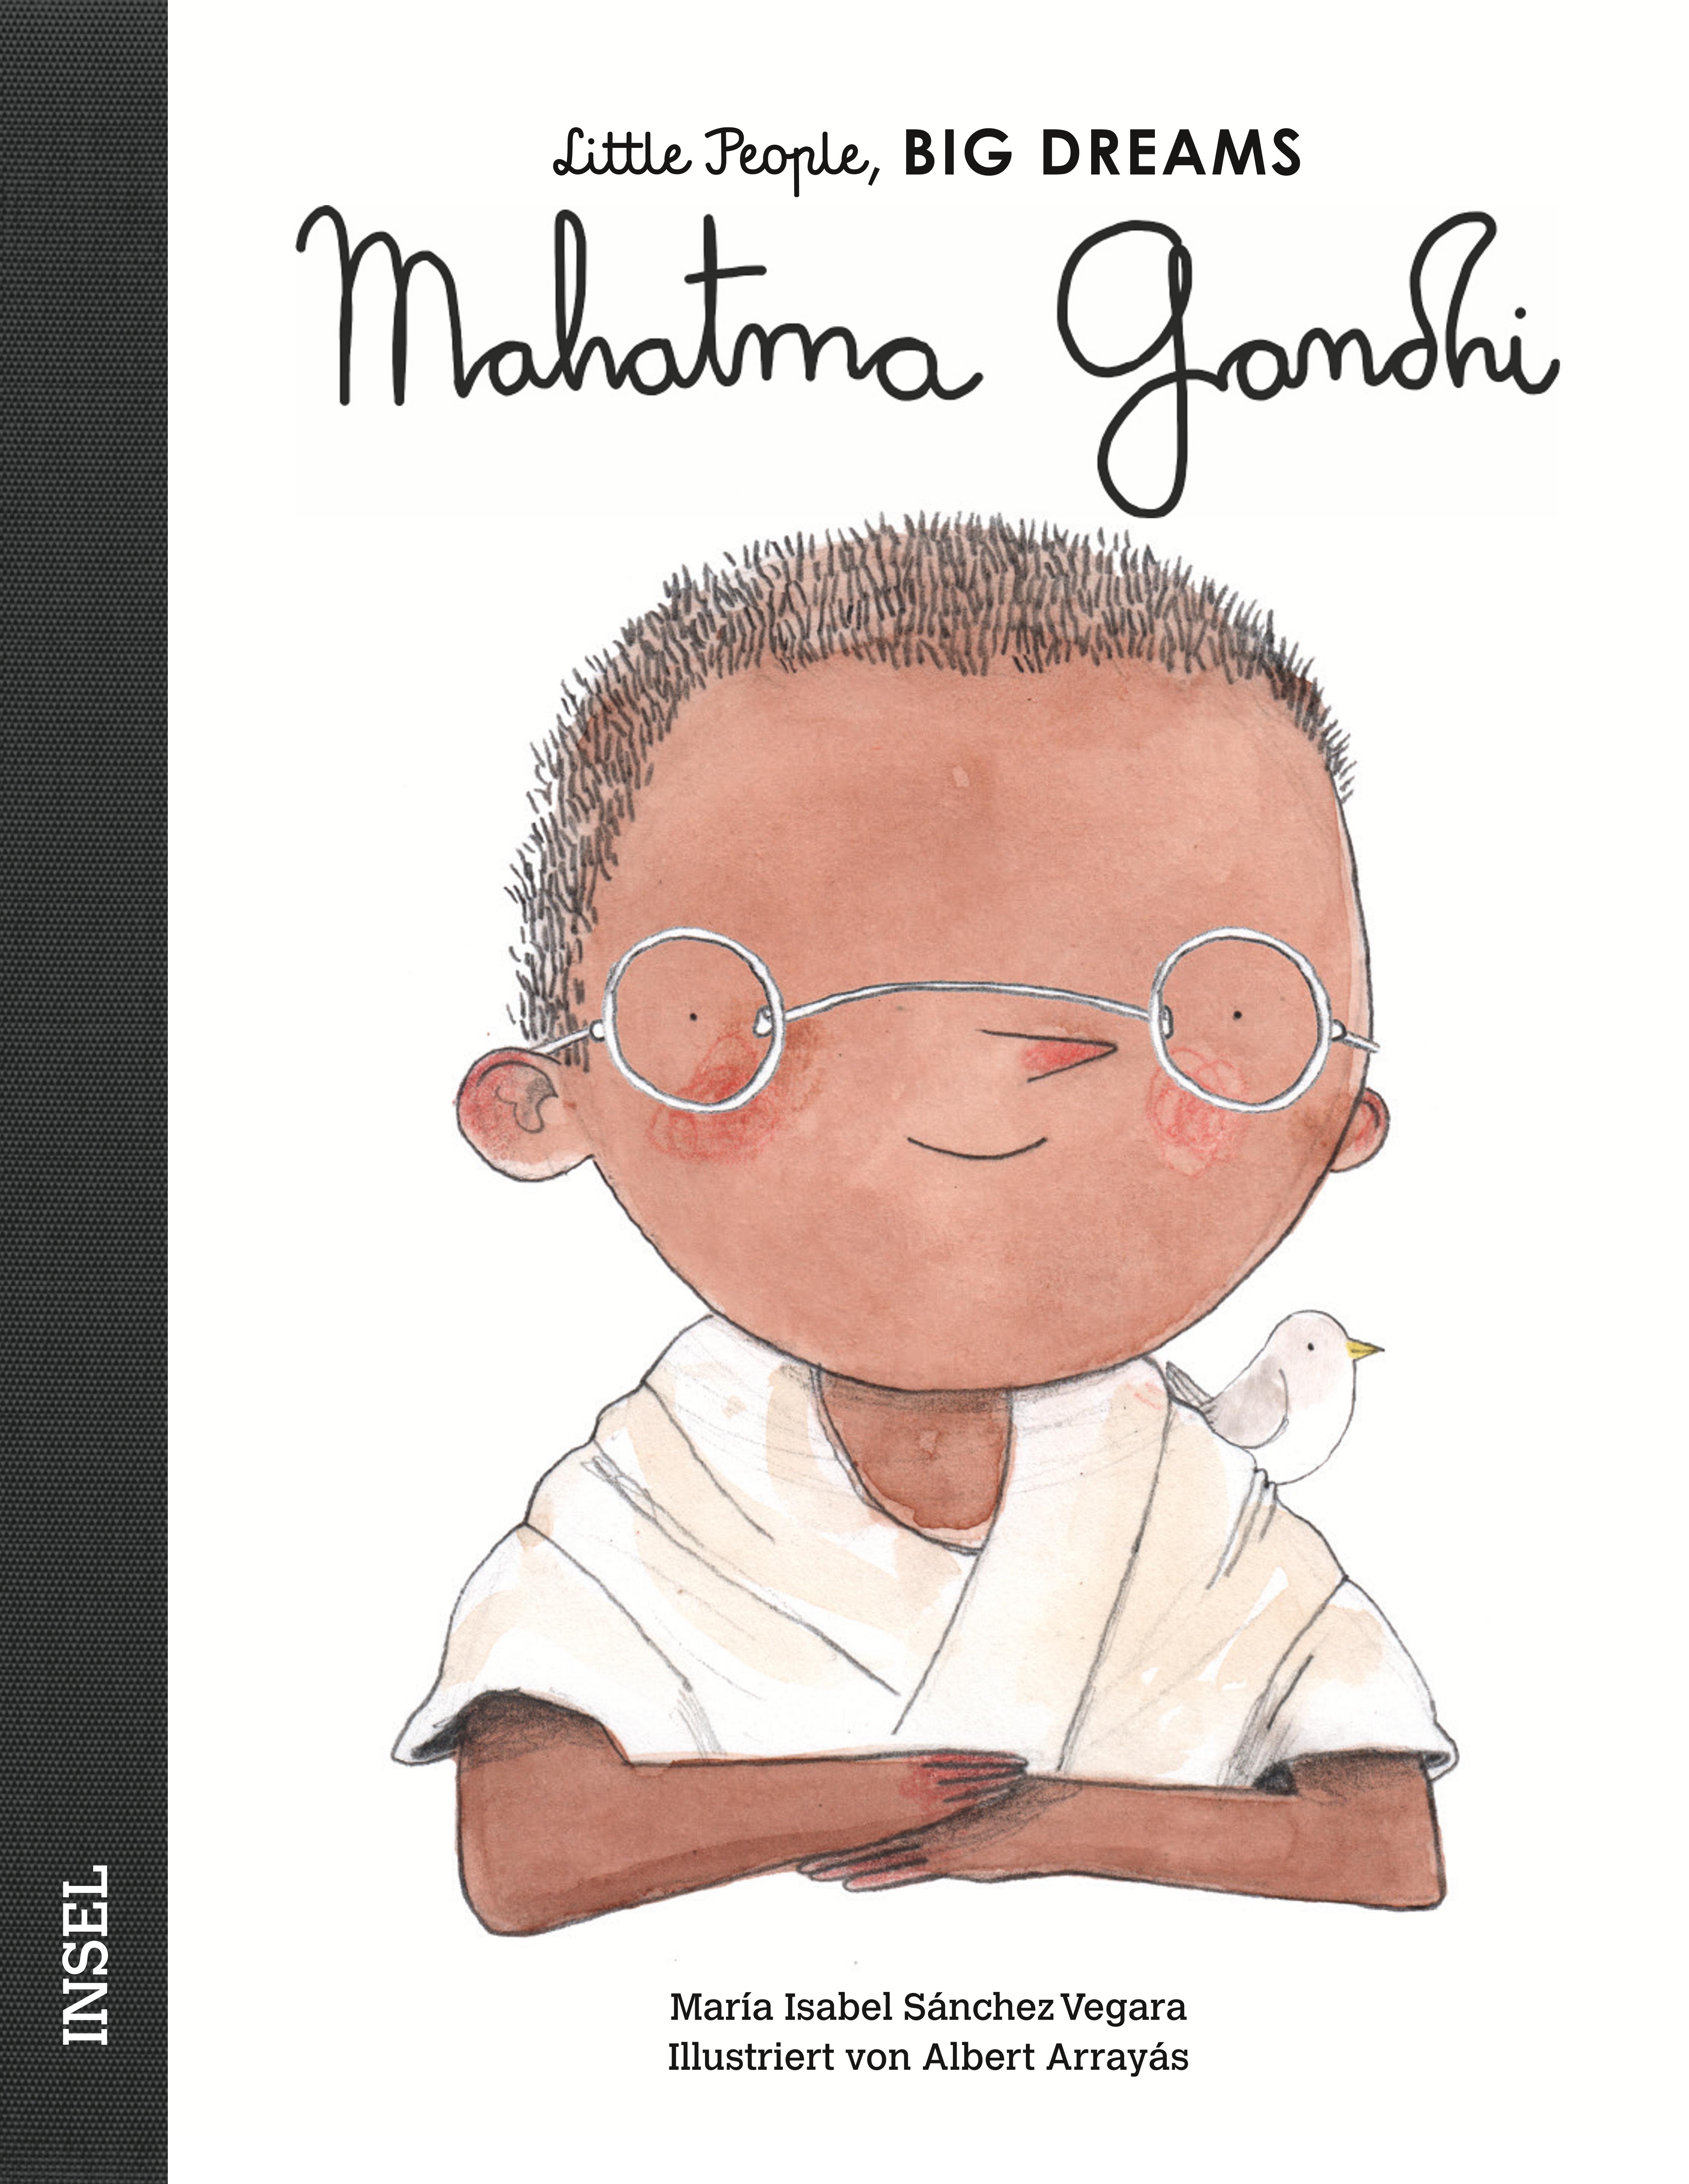 Buchcover "little people, big dreams: Mahatma Gandhi", Insel